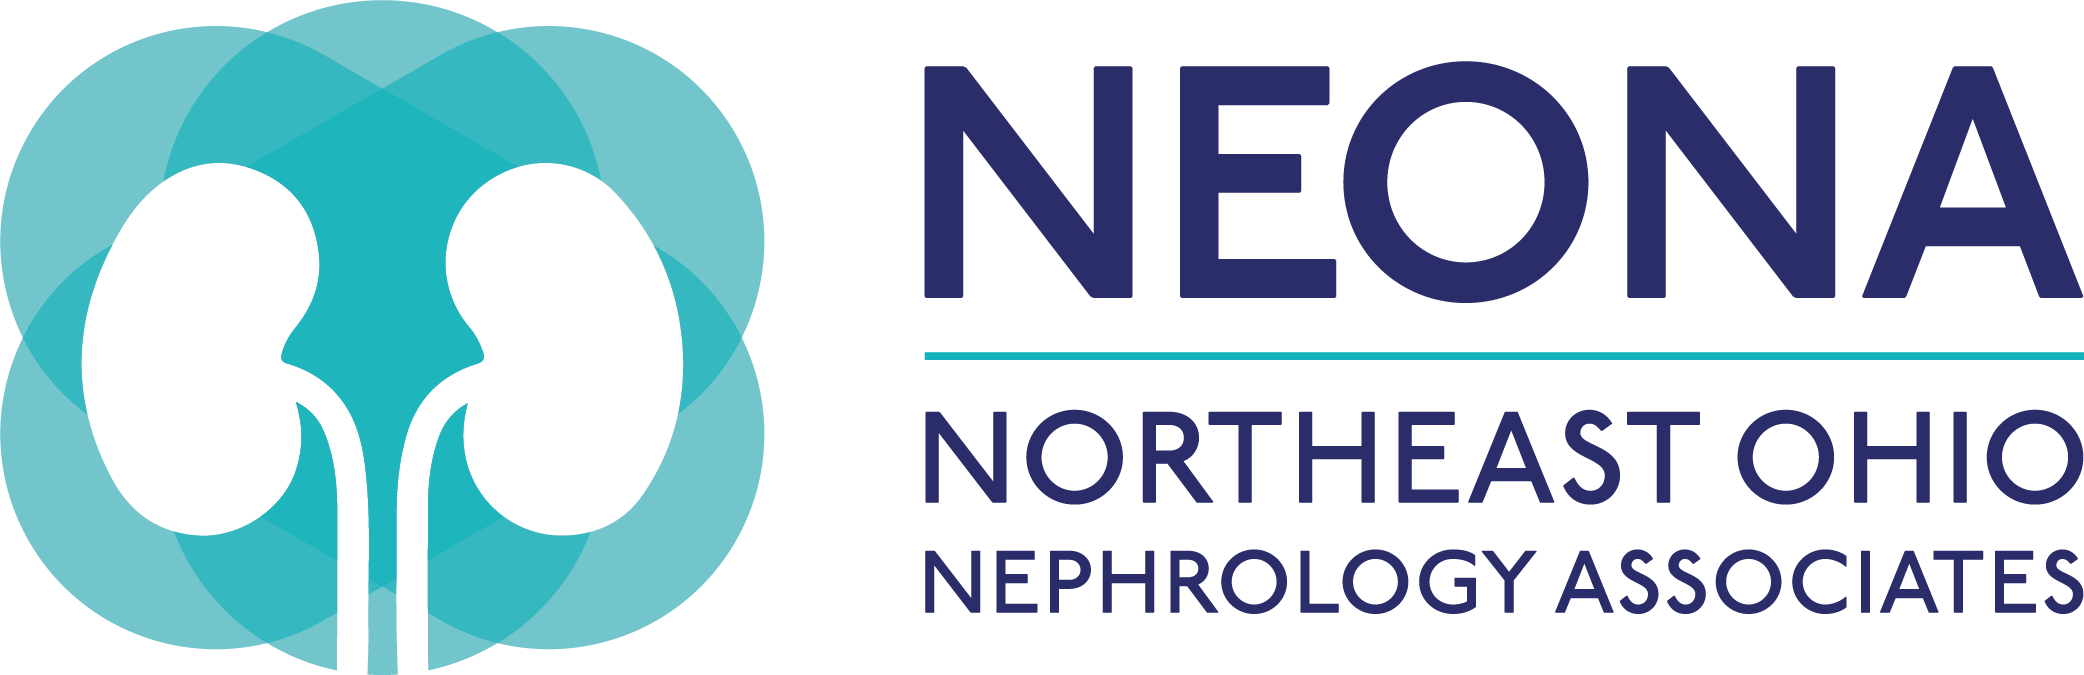 Northeast Ohio Nephrology Associates, Inc.